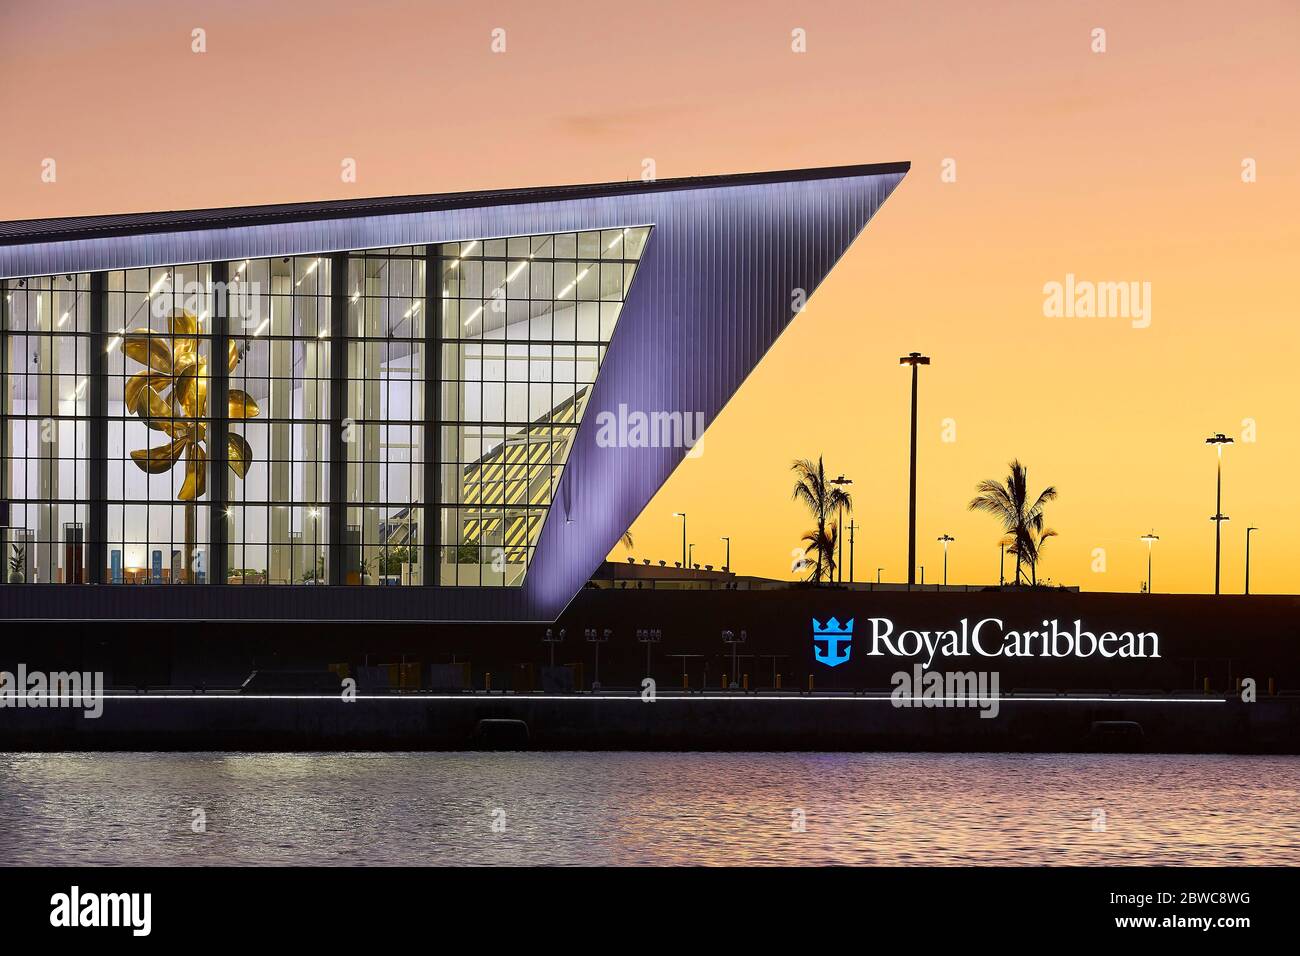 Exterior facade at sunset. Royal Caribbean Miami Cruise Terminal, Miami, United States. Architect: Broadway Malyan Limited, 2019. Stock Photo